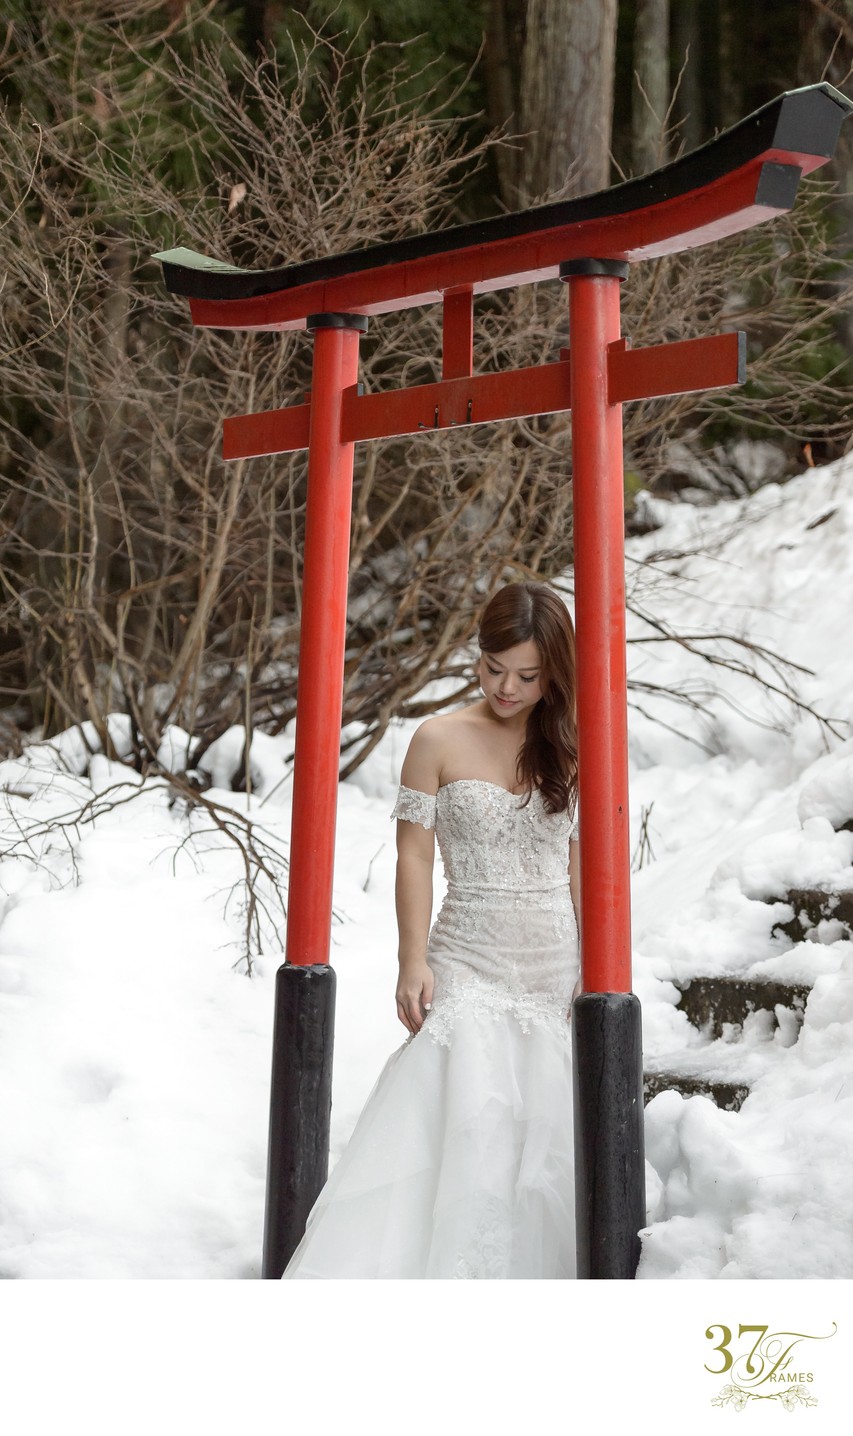 Elope in the Snow in Japan